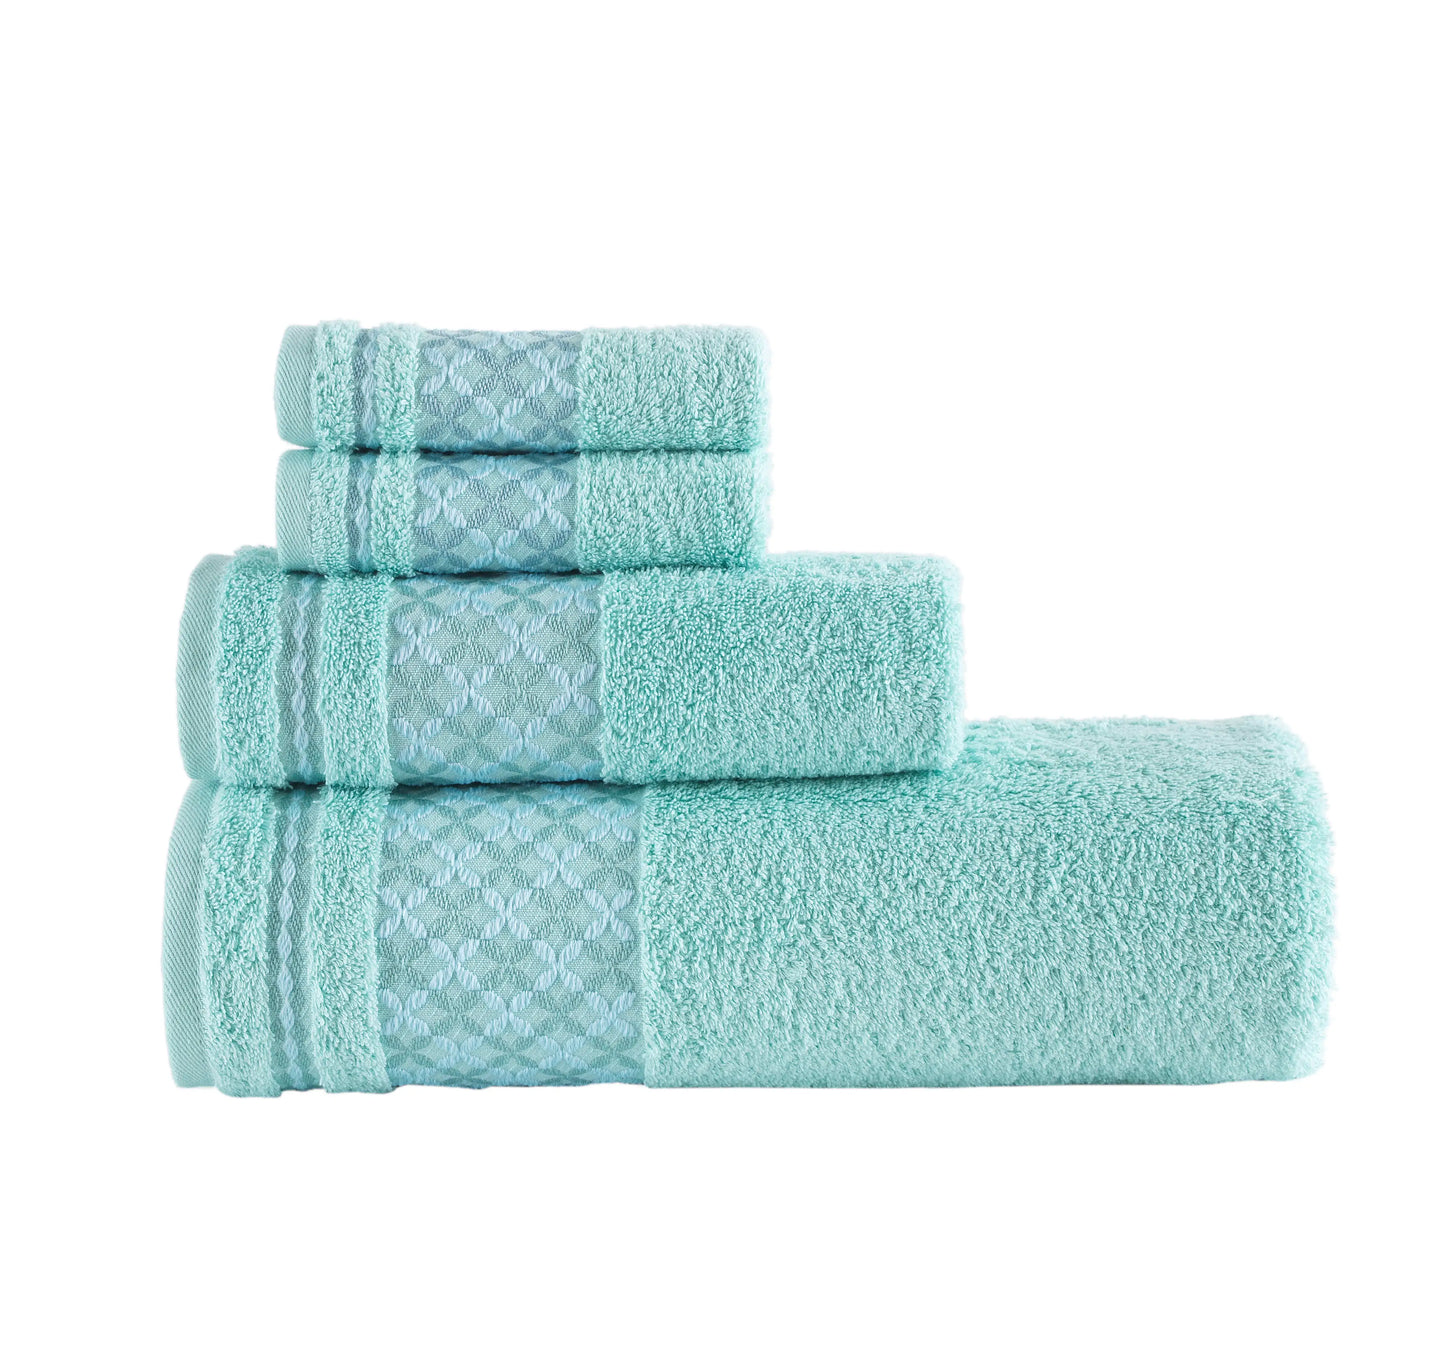 XXL Plaid Bath Towel/Sheet Set of 4 - 100% Turkish Cotton